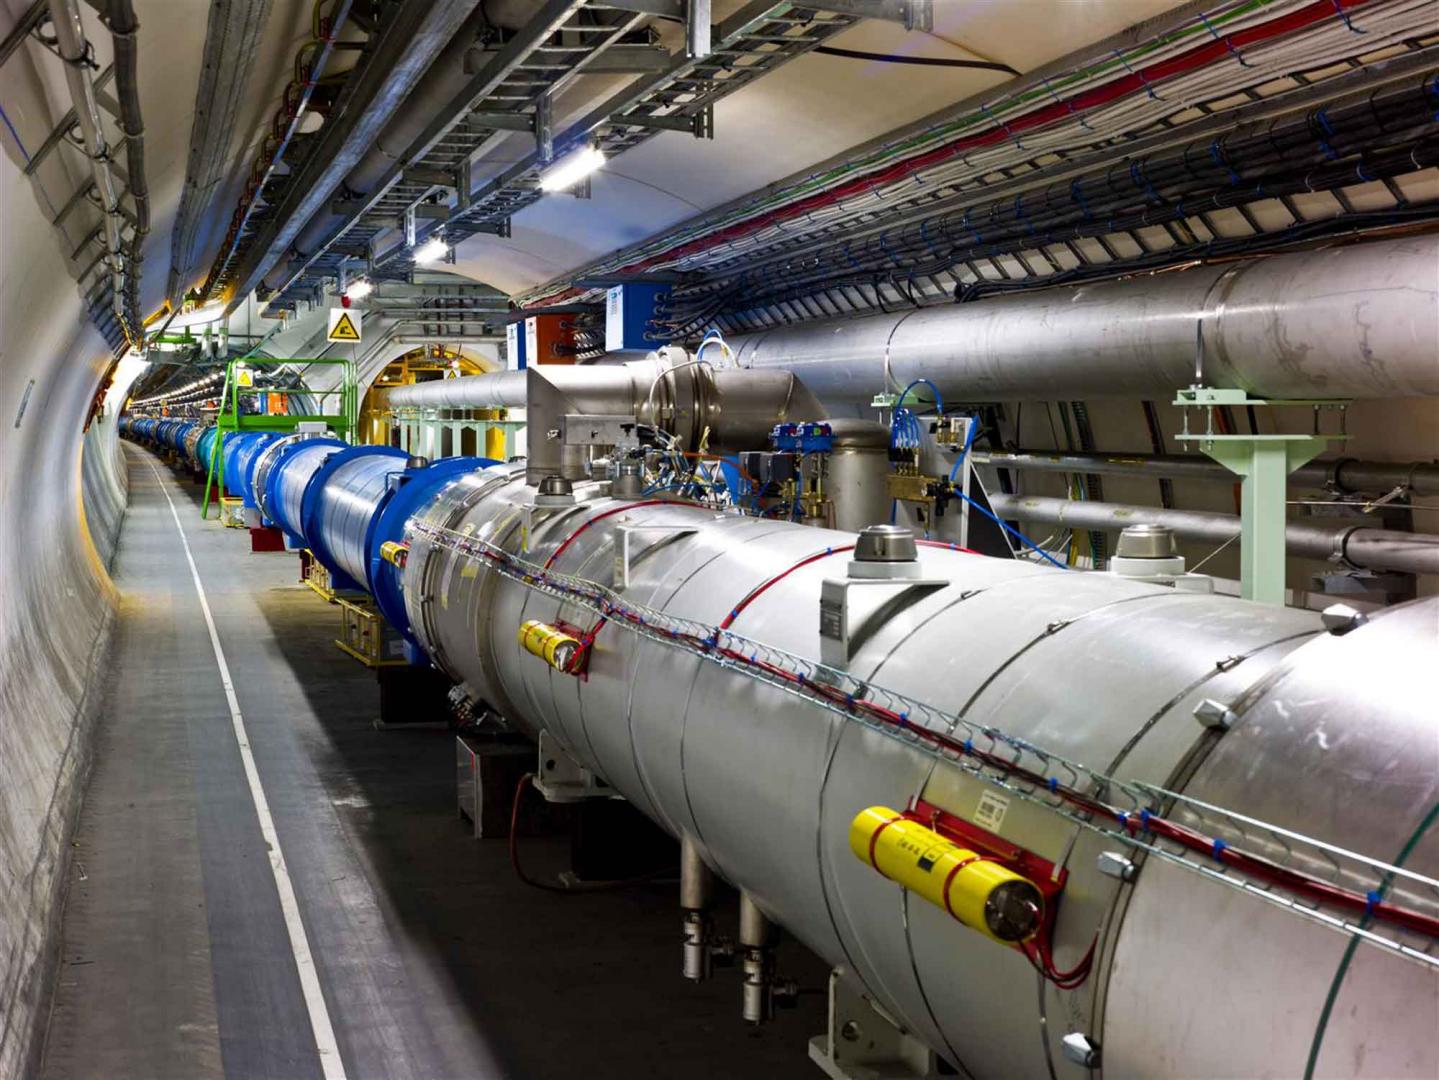 Open Days: Book now to visit CERN's underground facilities